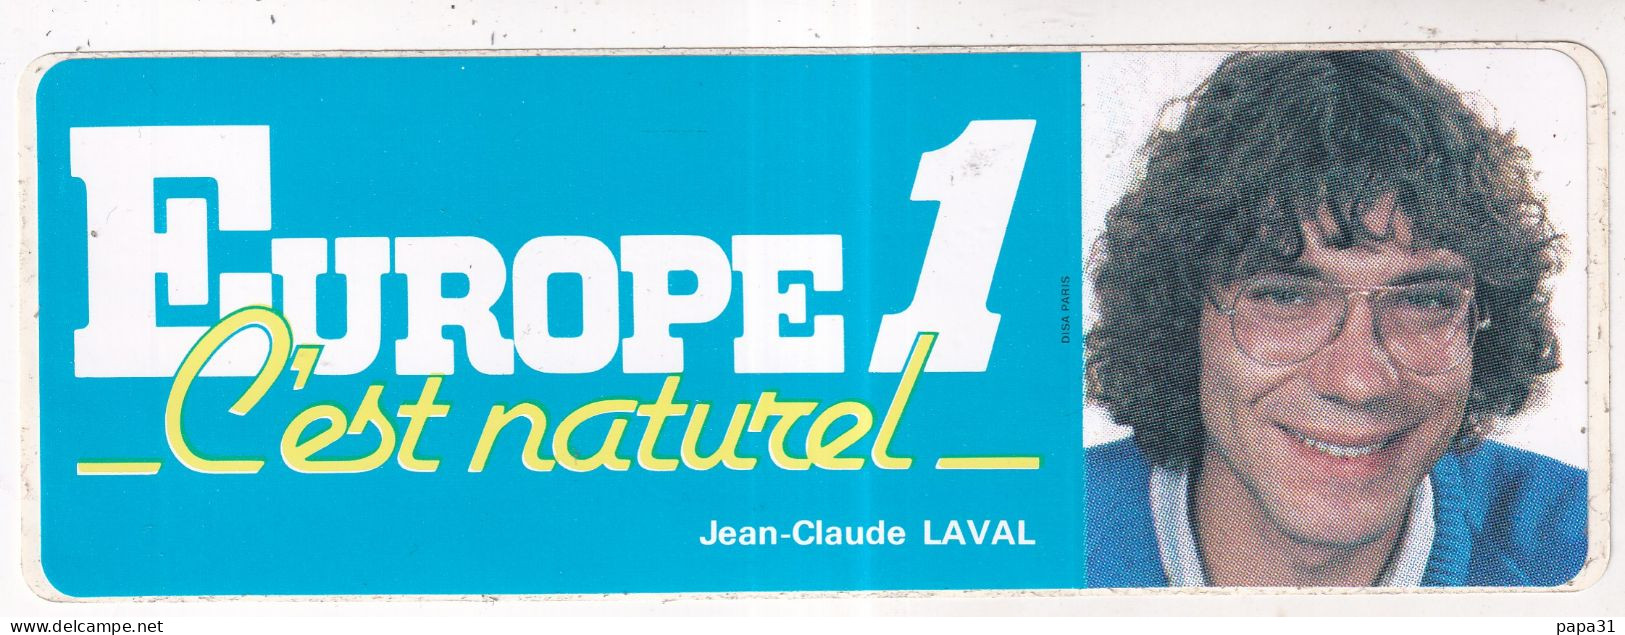 Autocollan -  EUROPE 1 C'est Naturel - Jean-Claude LAVAL - Pegatinas